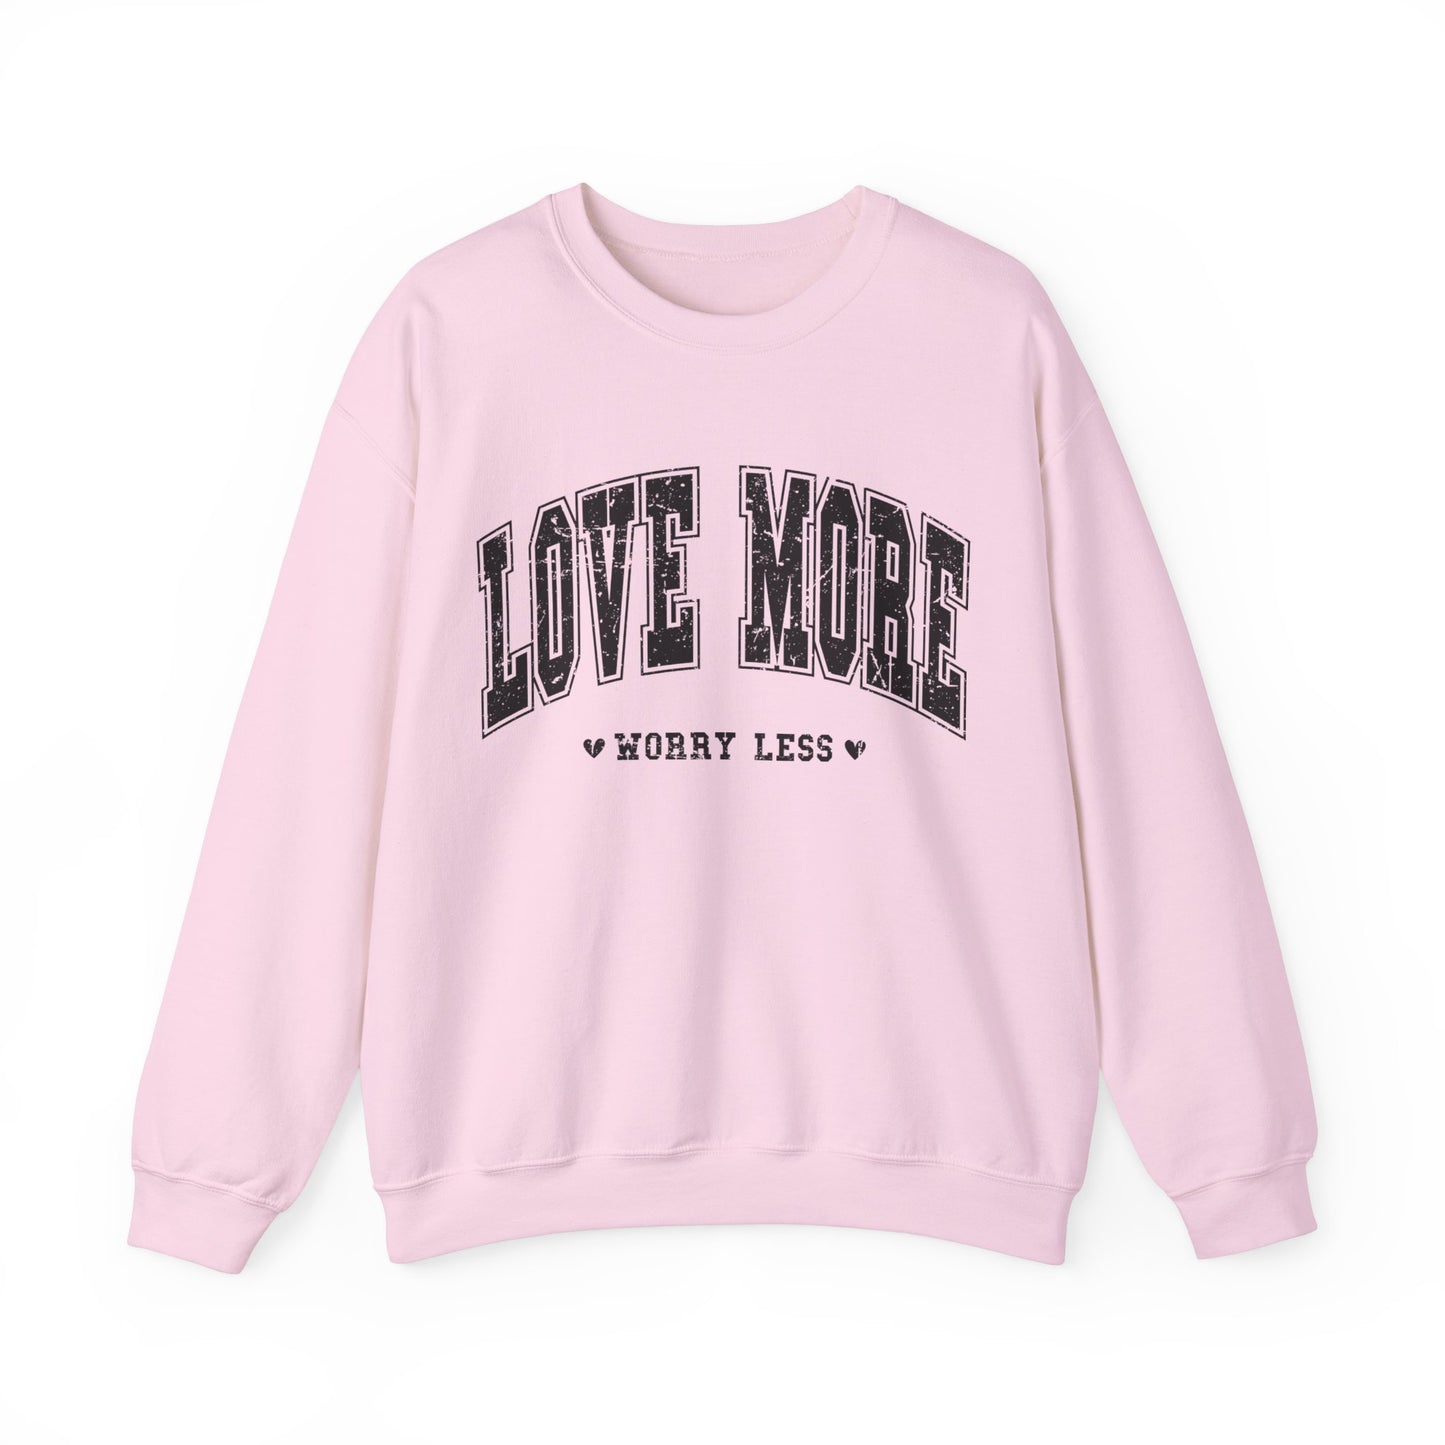 Love More Worry Less Sweethearts Women's Sweatshirt